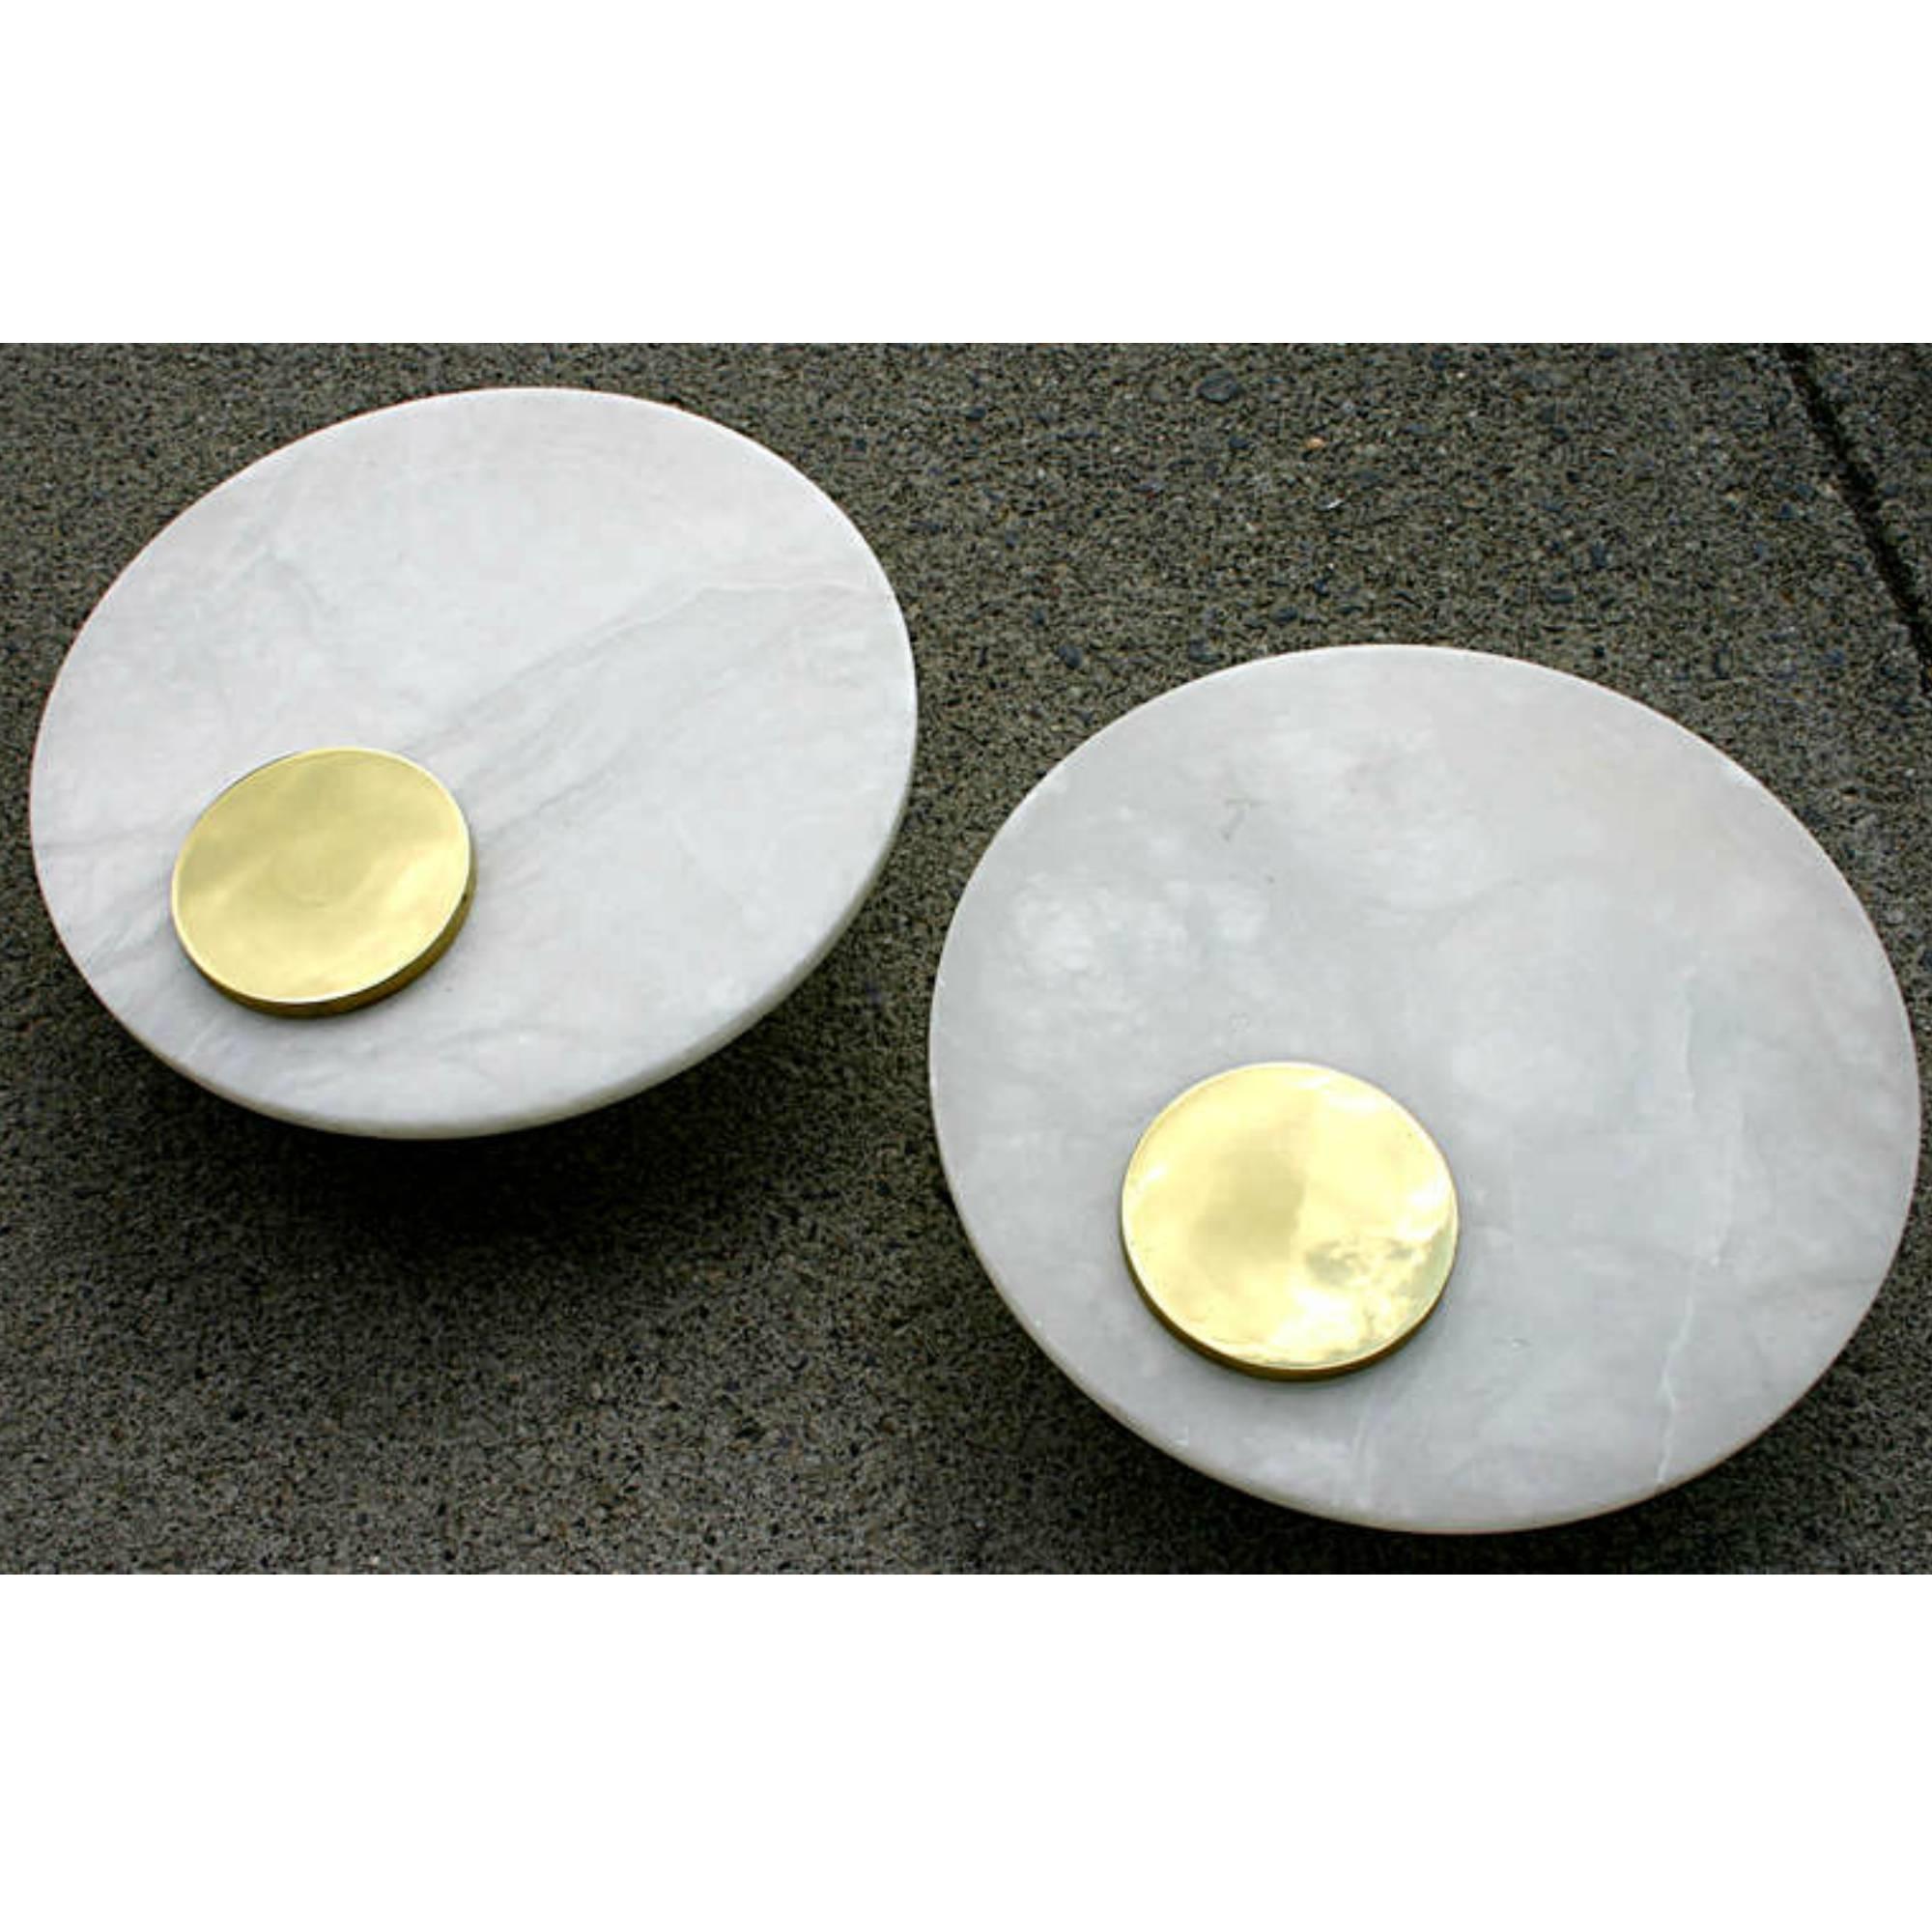 Simple and elegant pair of alabaster floating disc sconces.